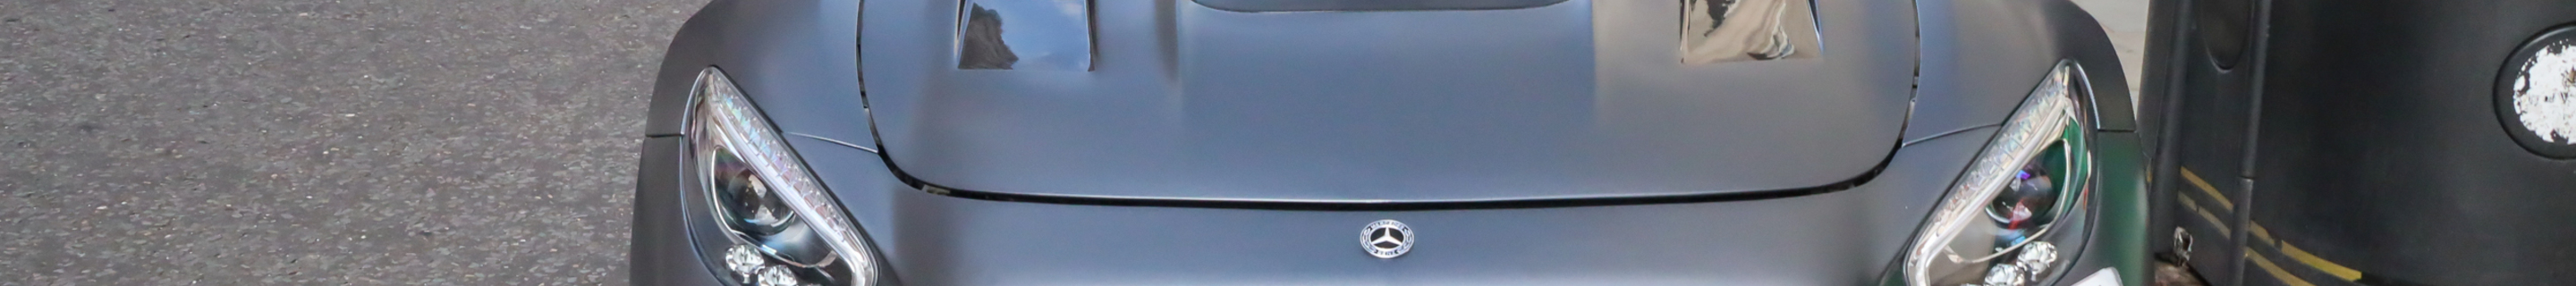 Mercedes-AMG GT S C190 2017 7th Row Customs